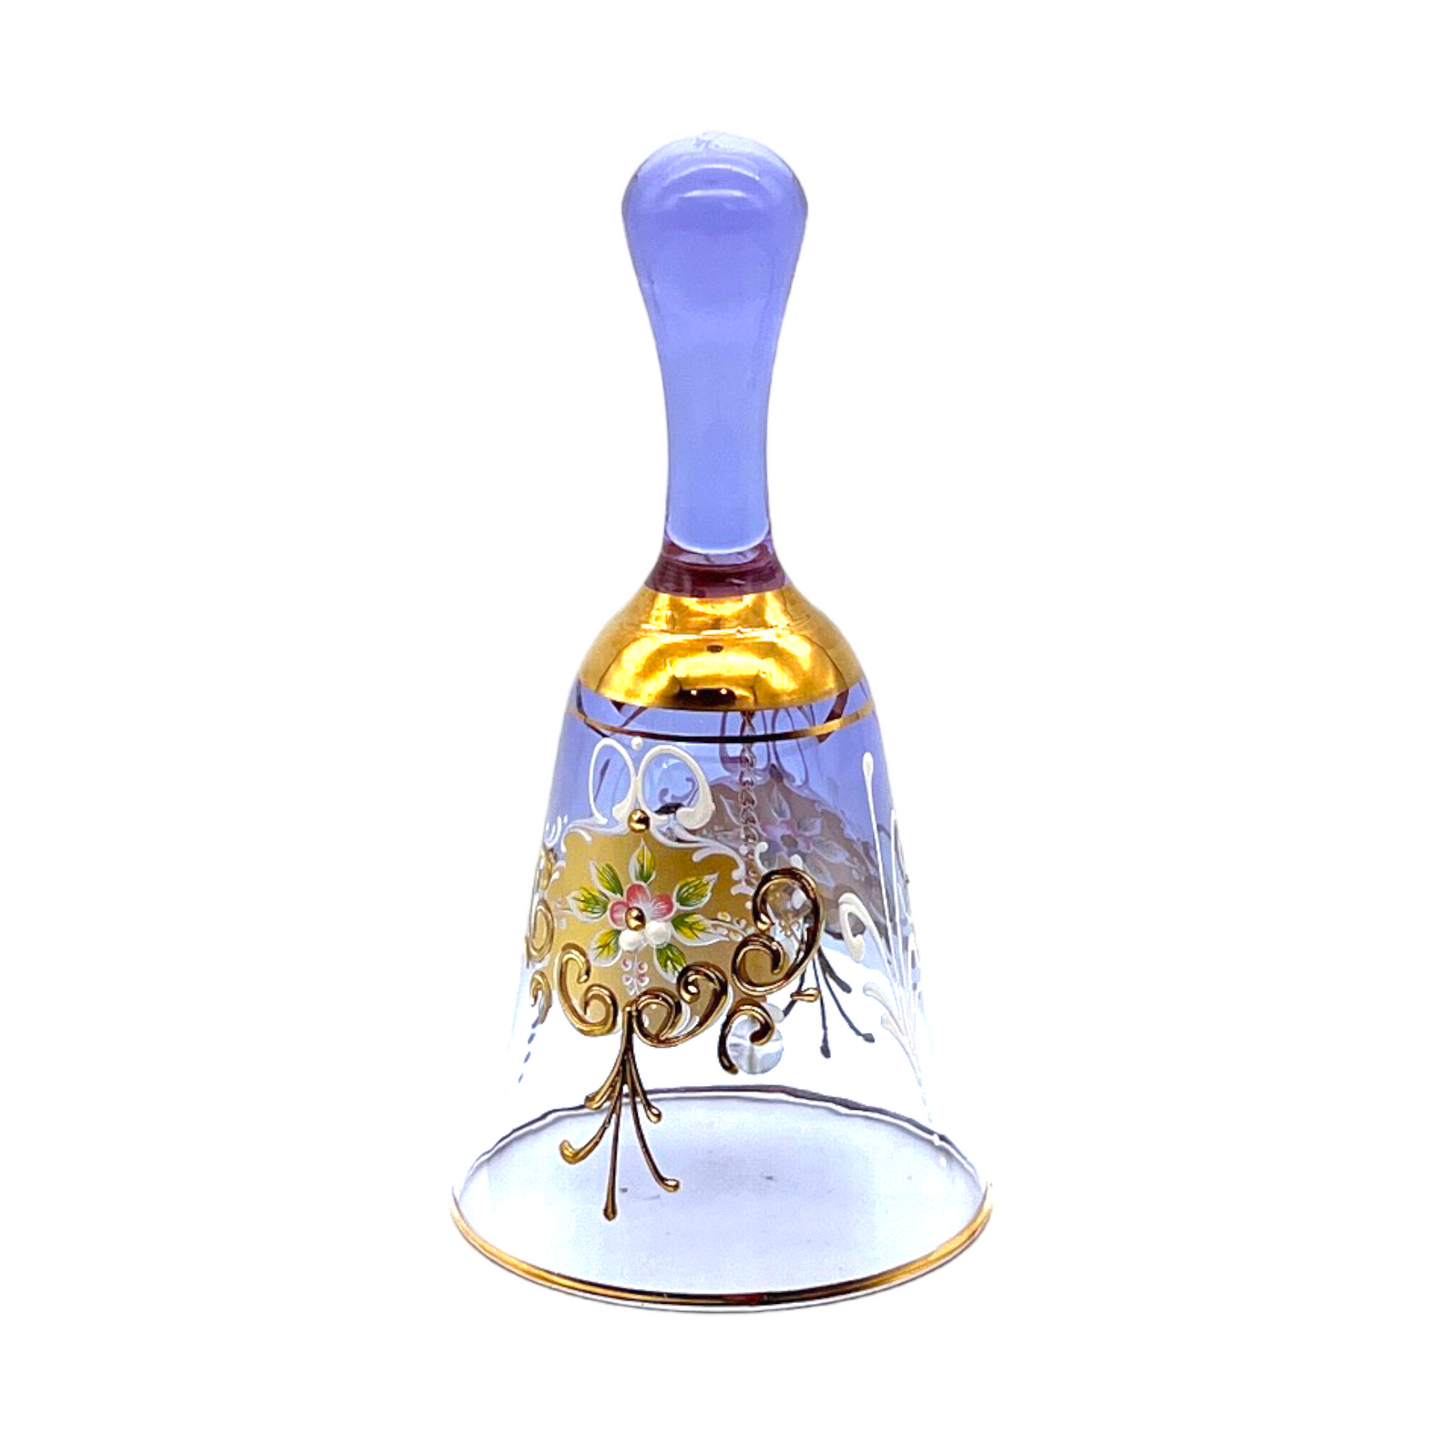 Murano Art Glass - 1930-1950s Era Hand Blown Italian Floral & Gilt Glass Bell in 24k Accent - 6"